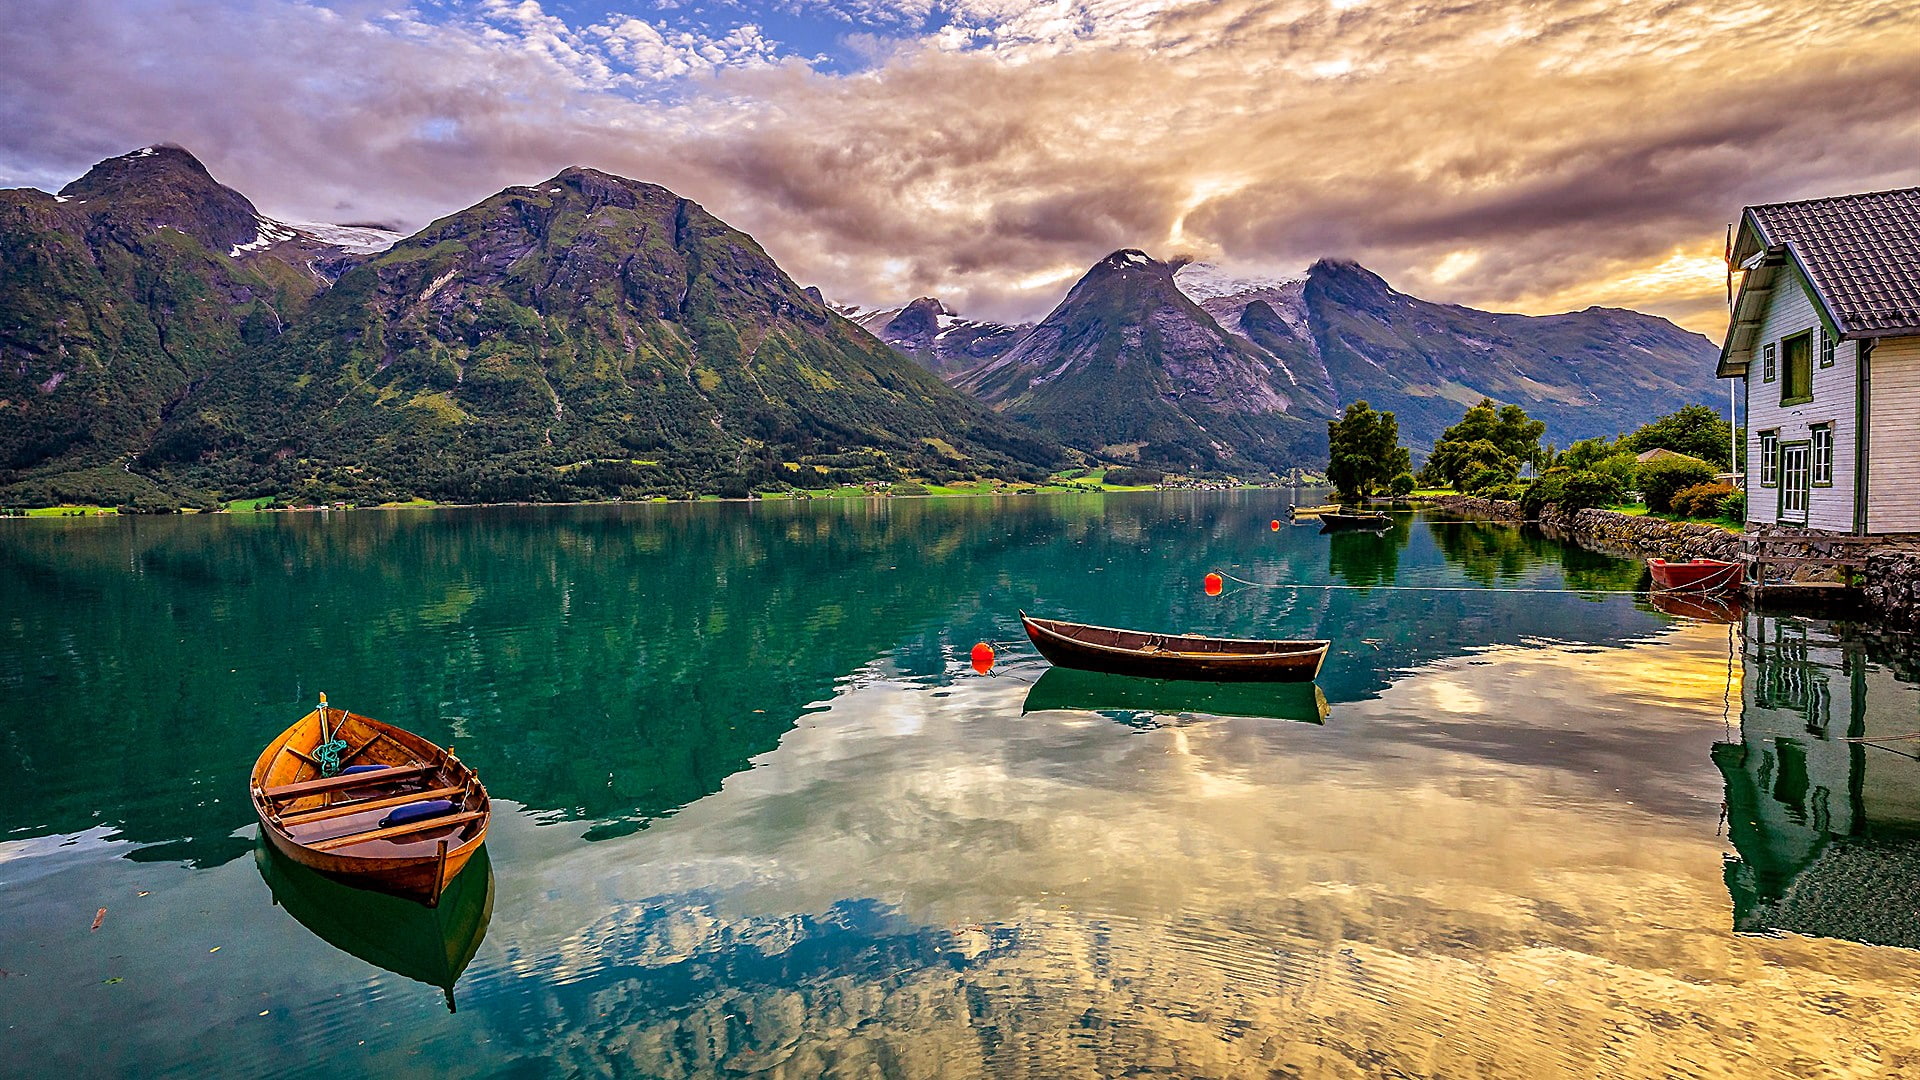 fjord, lakeside, boats, house, europe, norway, sogn og fjordane